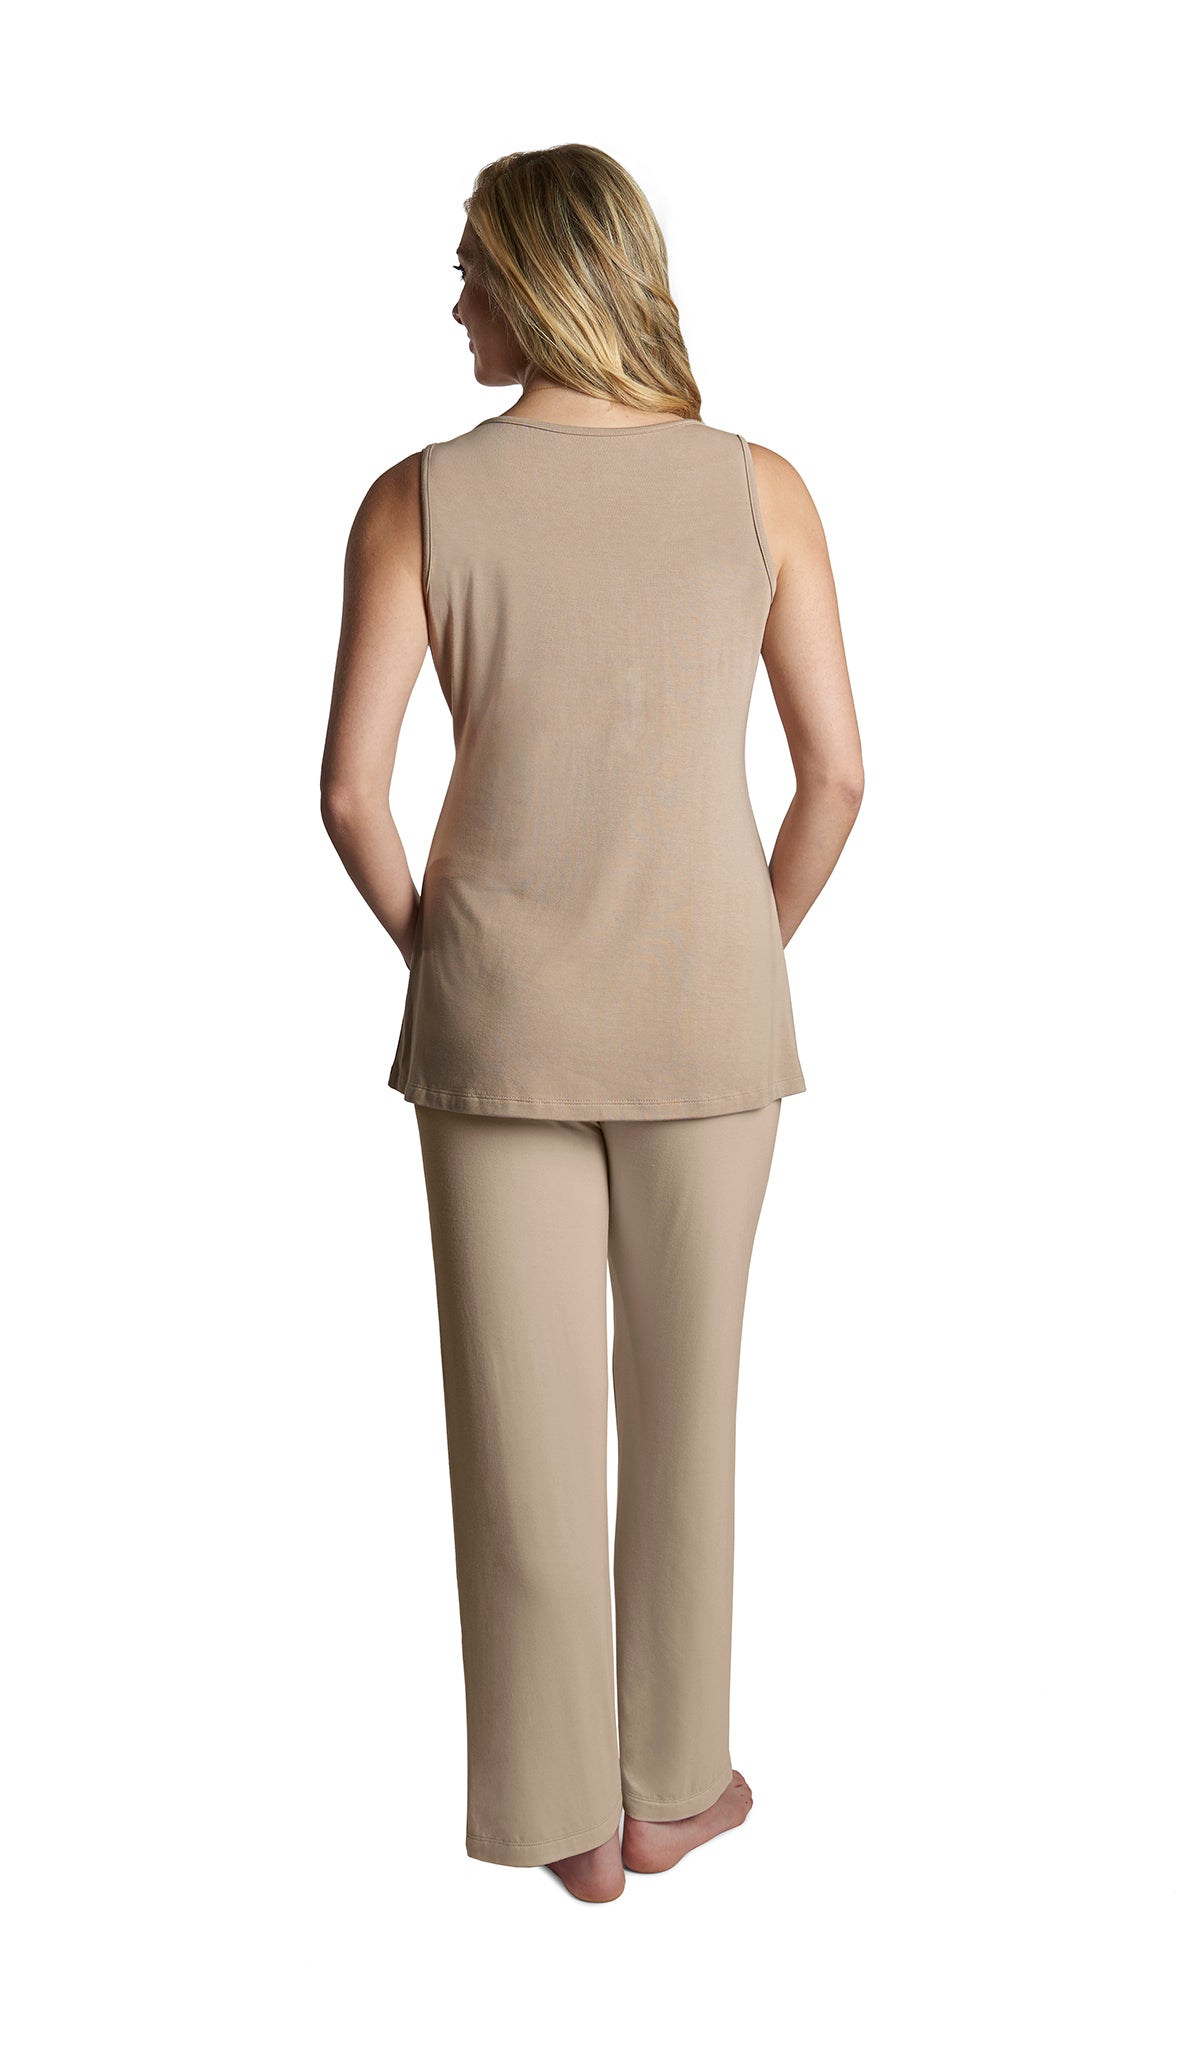 Latte Analise 3-Piece Set, back shot of woman wearing tank top and pant.